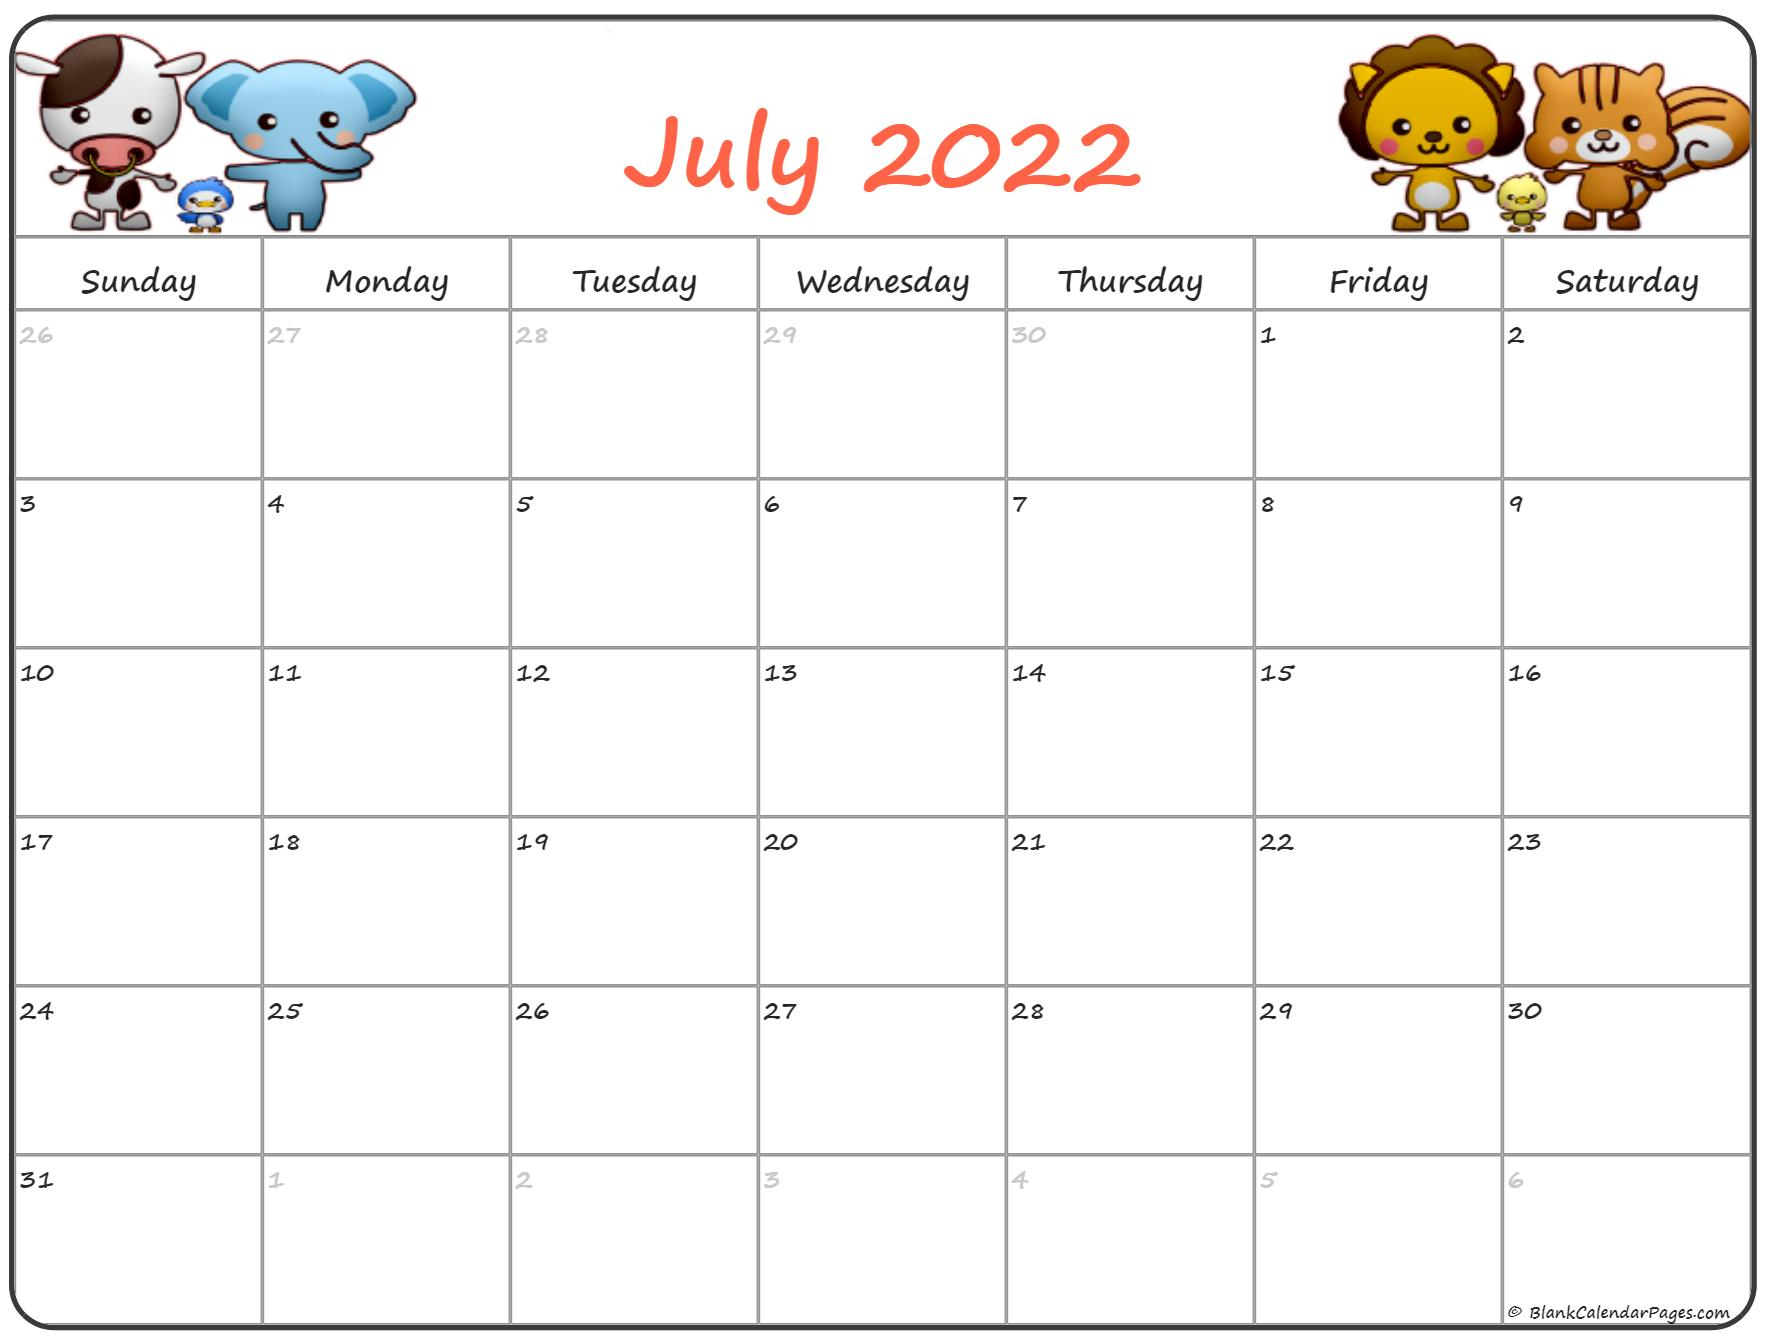 Take Lunar Calendar July 2022